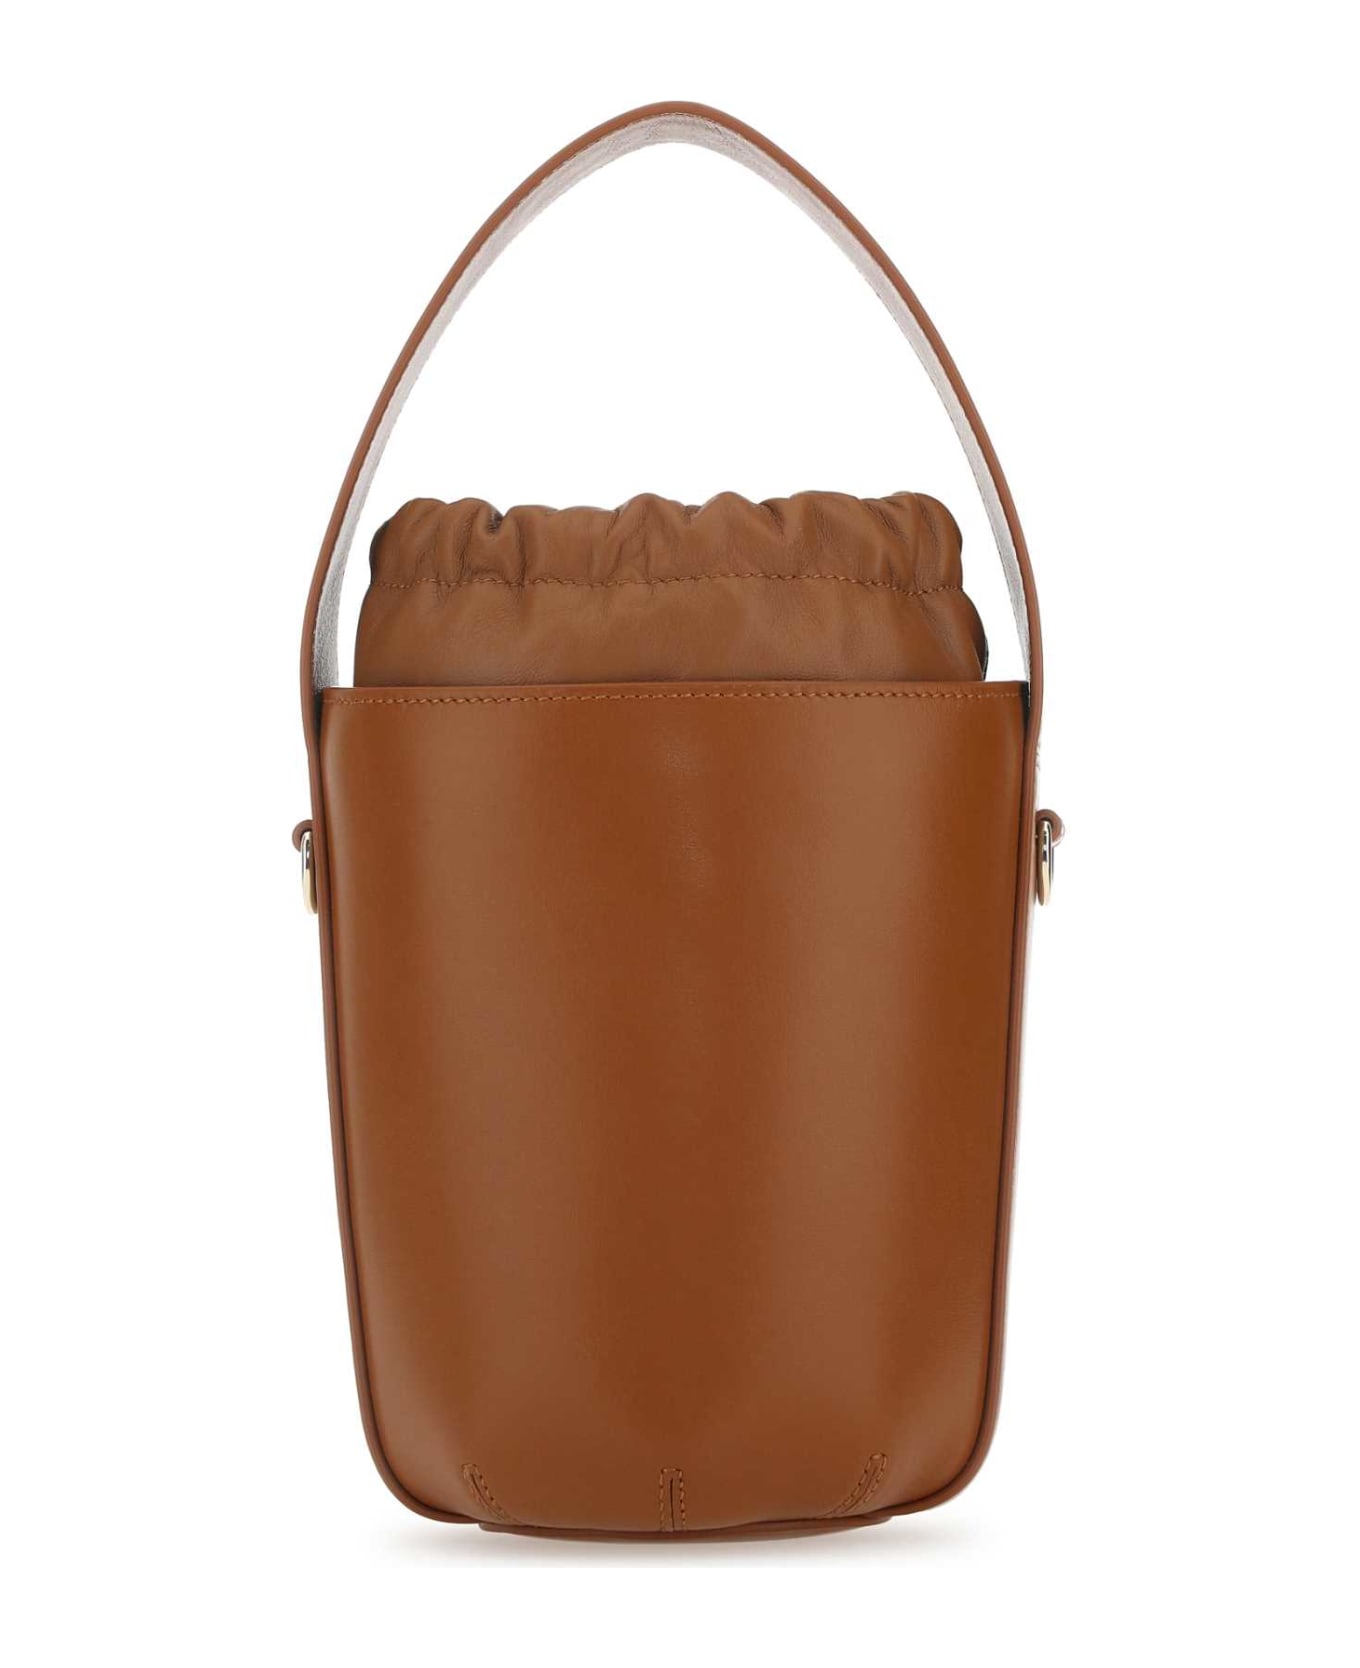 Chloé Caramel Leather Bucket Bag - CARAMEL